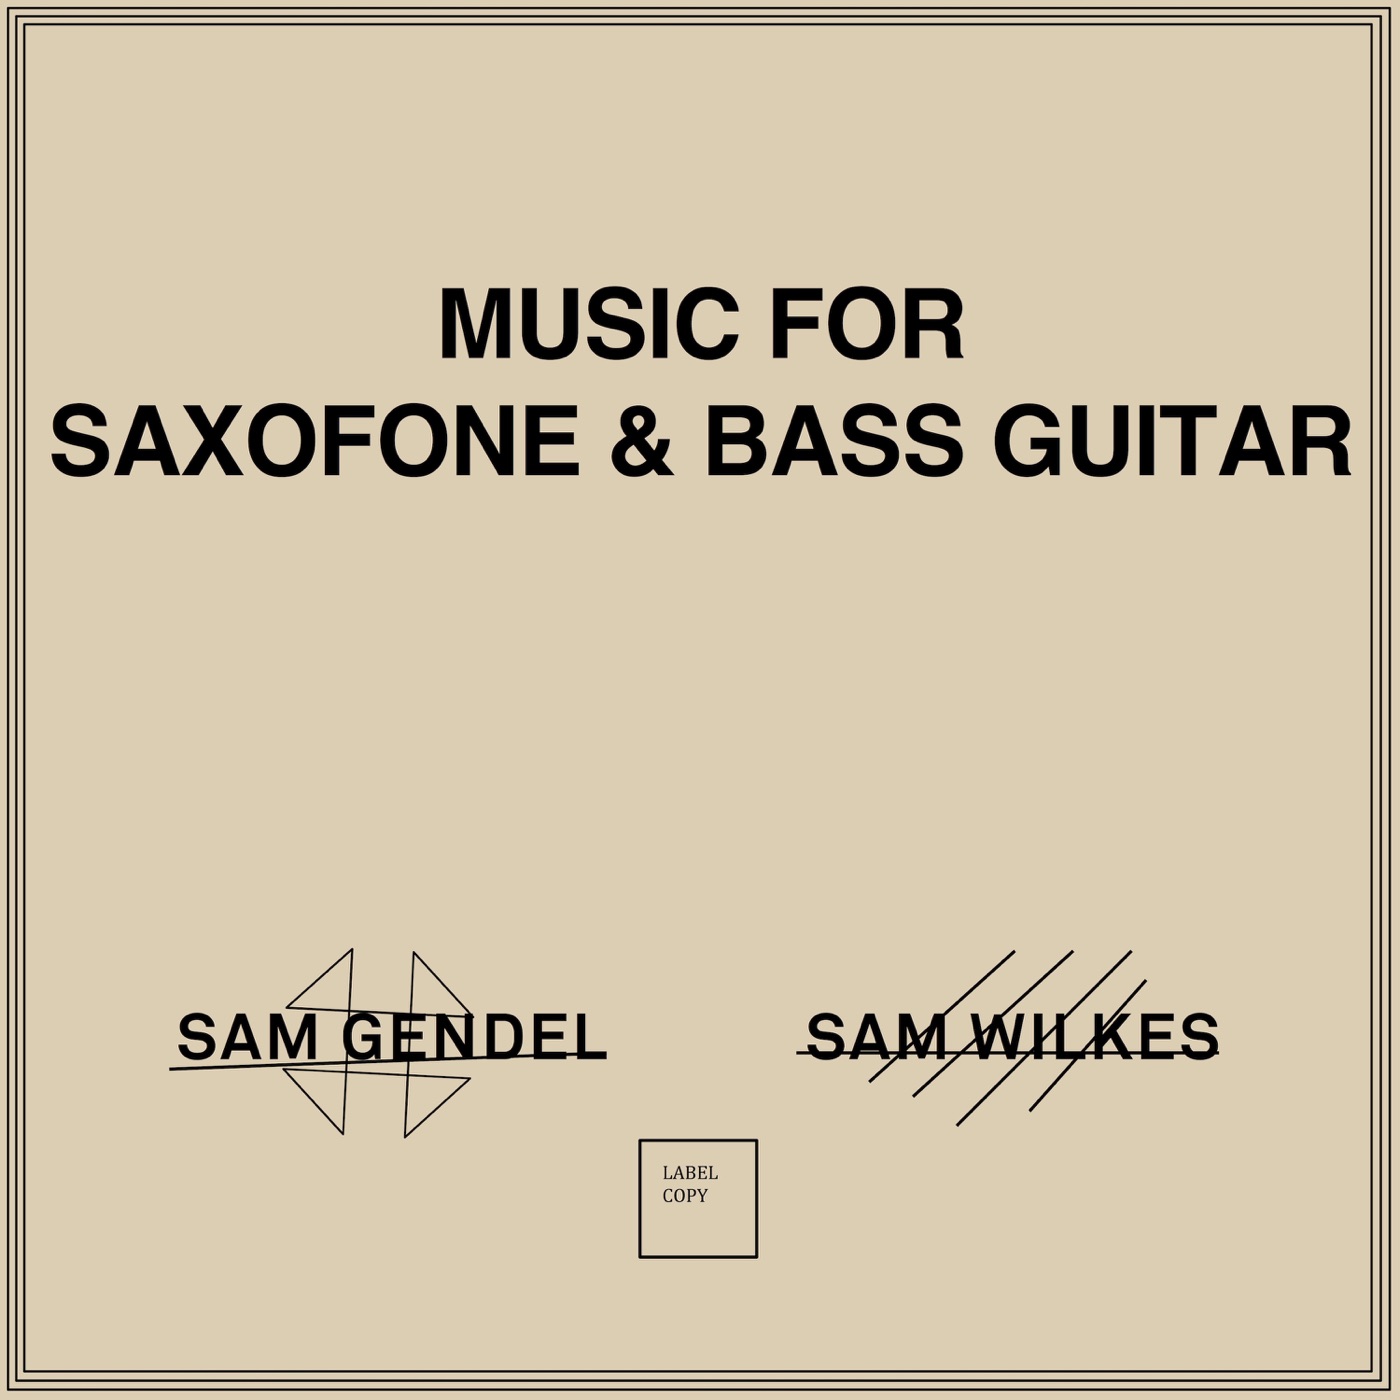 Music for Saxofone & Bass Guitar by Sam Gendel, Sam Wilkes